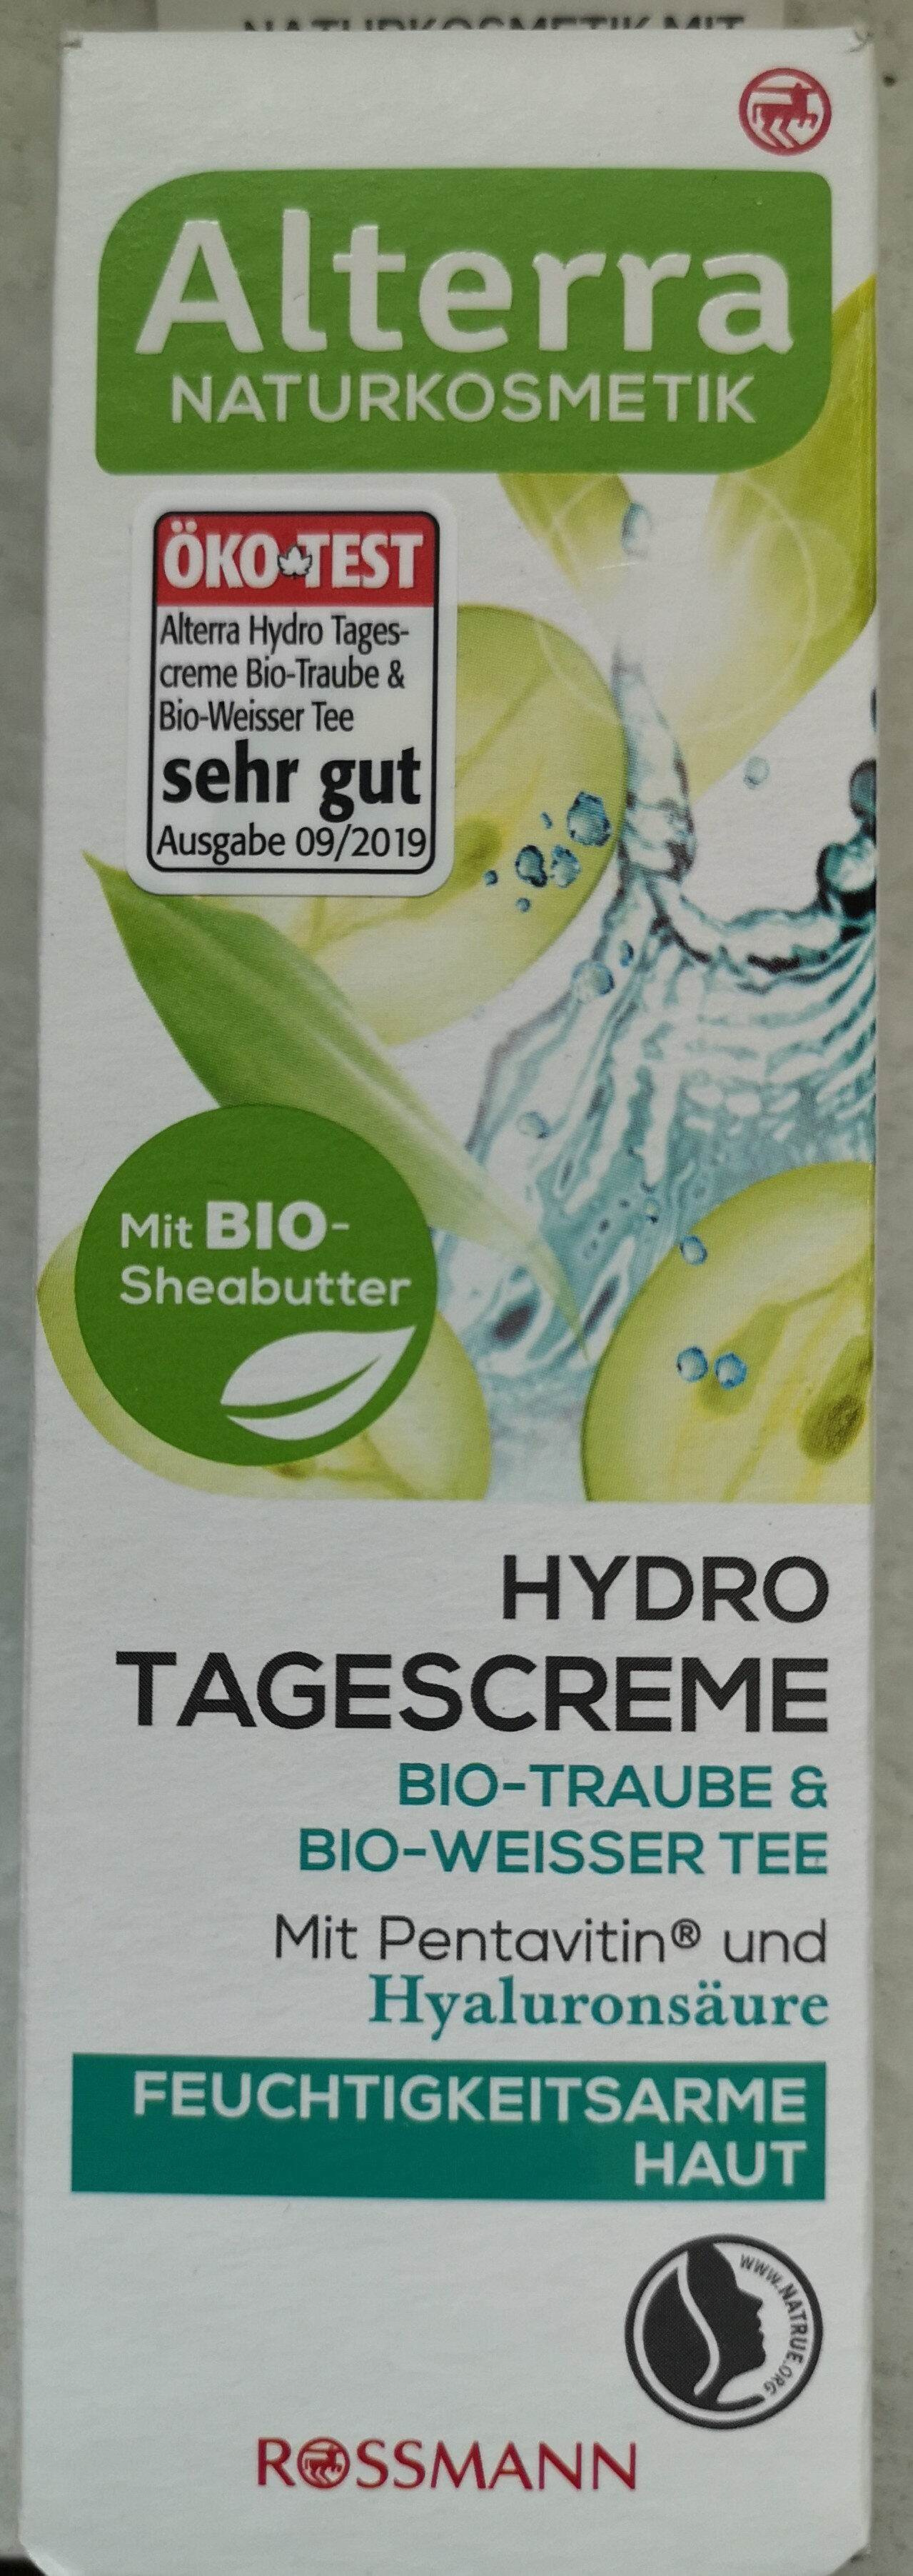 Hydro Tagescreme Bio-Traube & Bio-Weisser Tee - 製品 - de